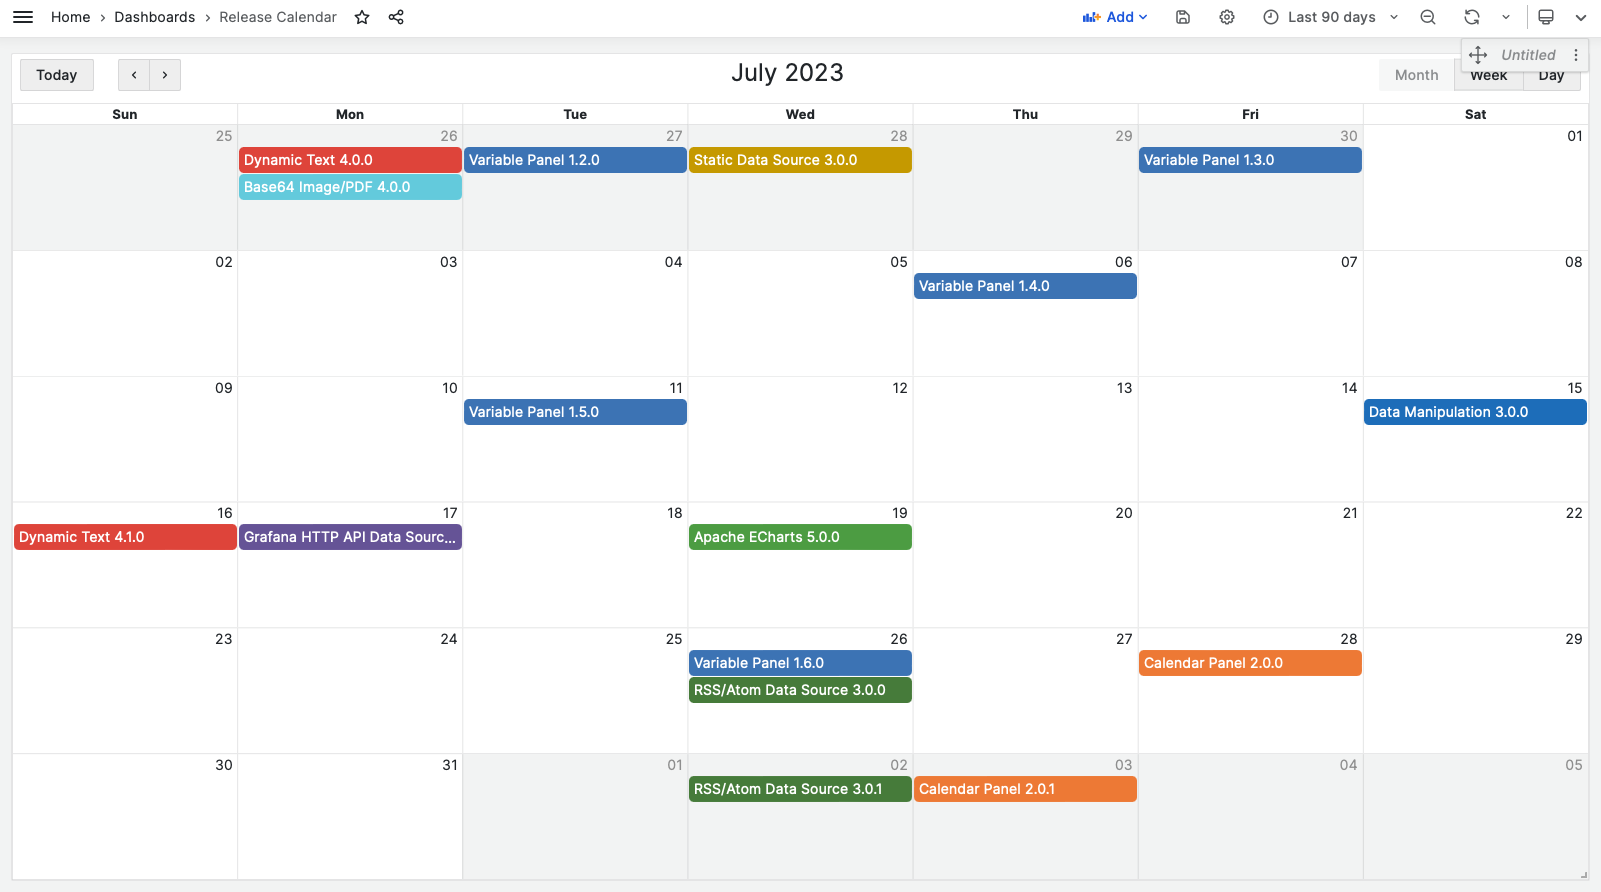 Calendar Panel displays Volkov Labs' releases in July 2023.